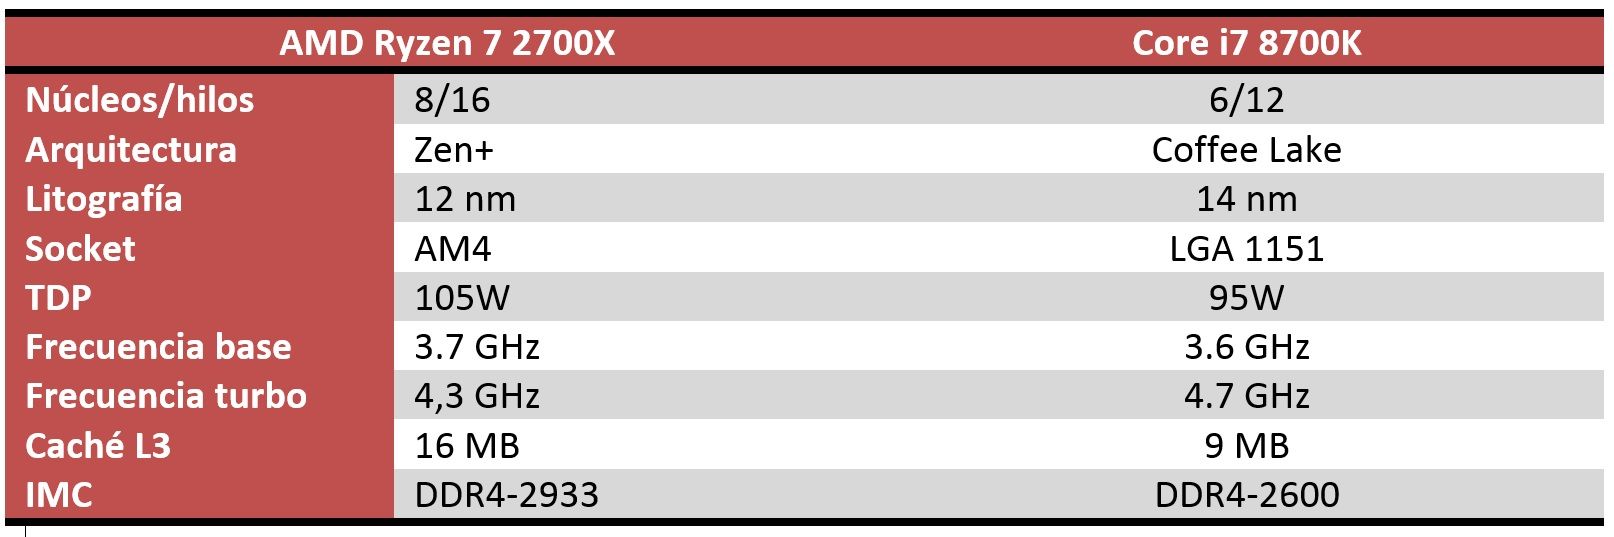 AMD Ryzen 7 2700X vs Intel Core i7 8700K, a comparison of games and applications